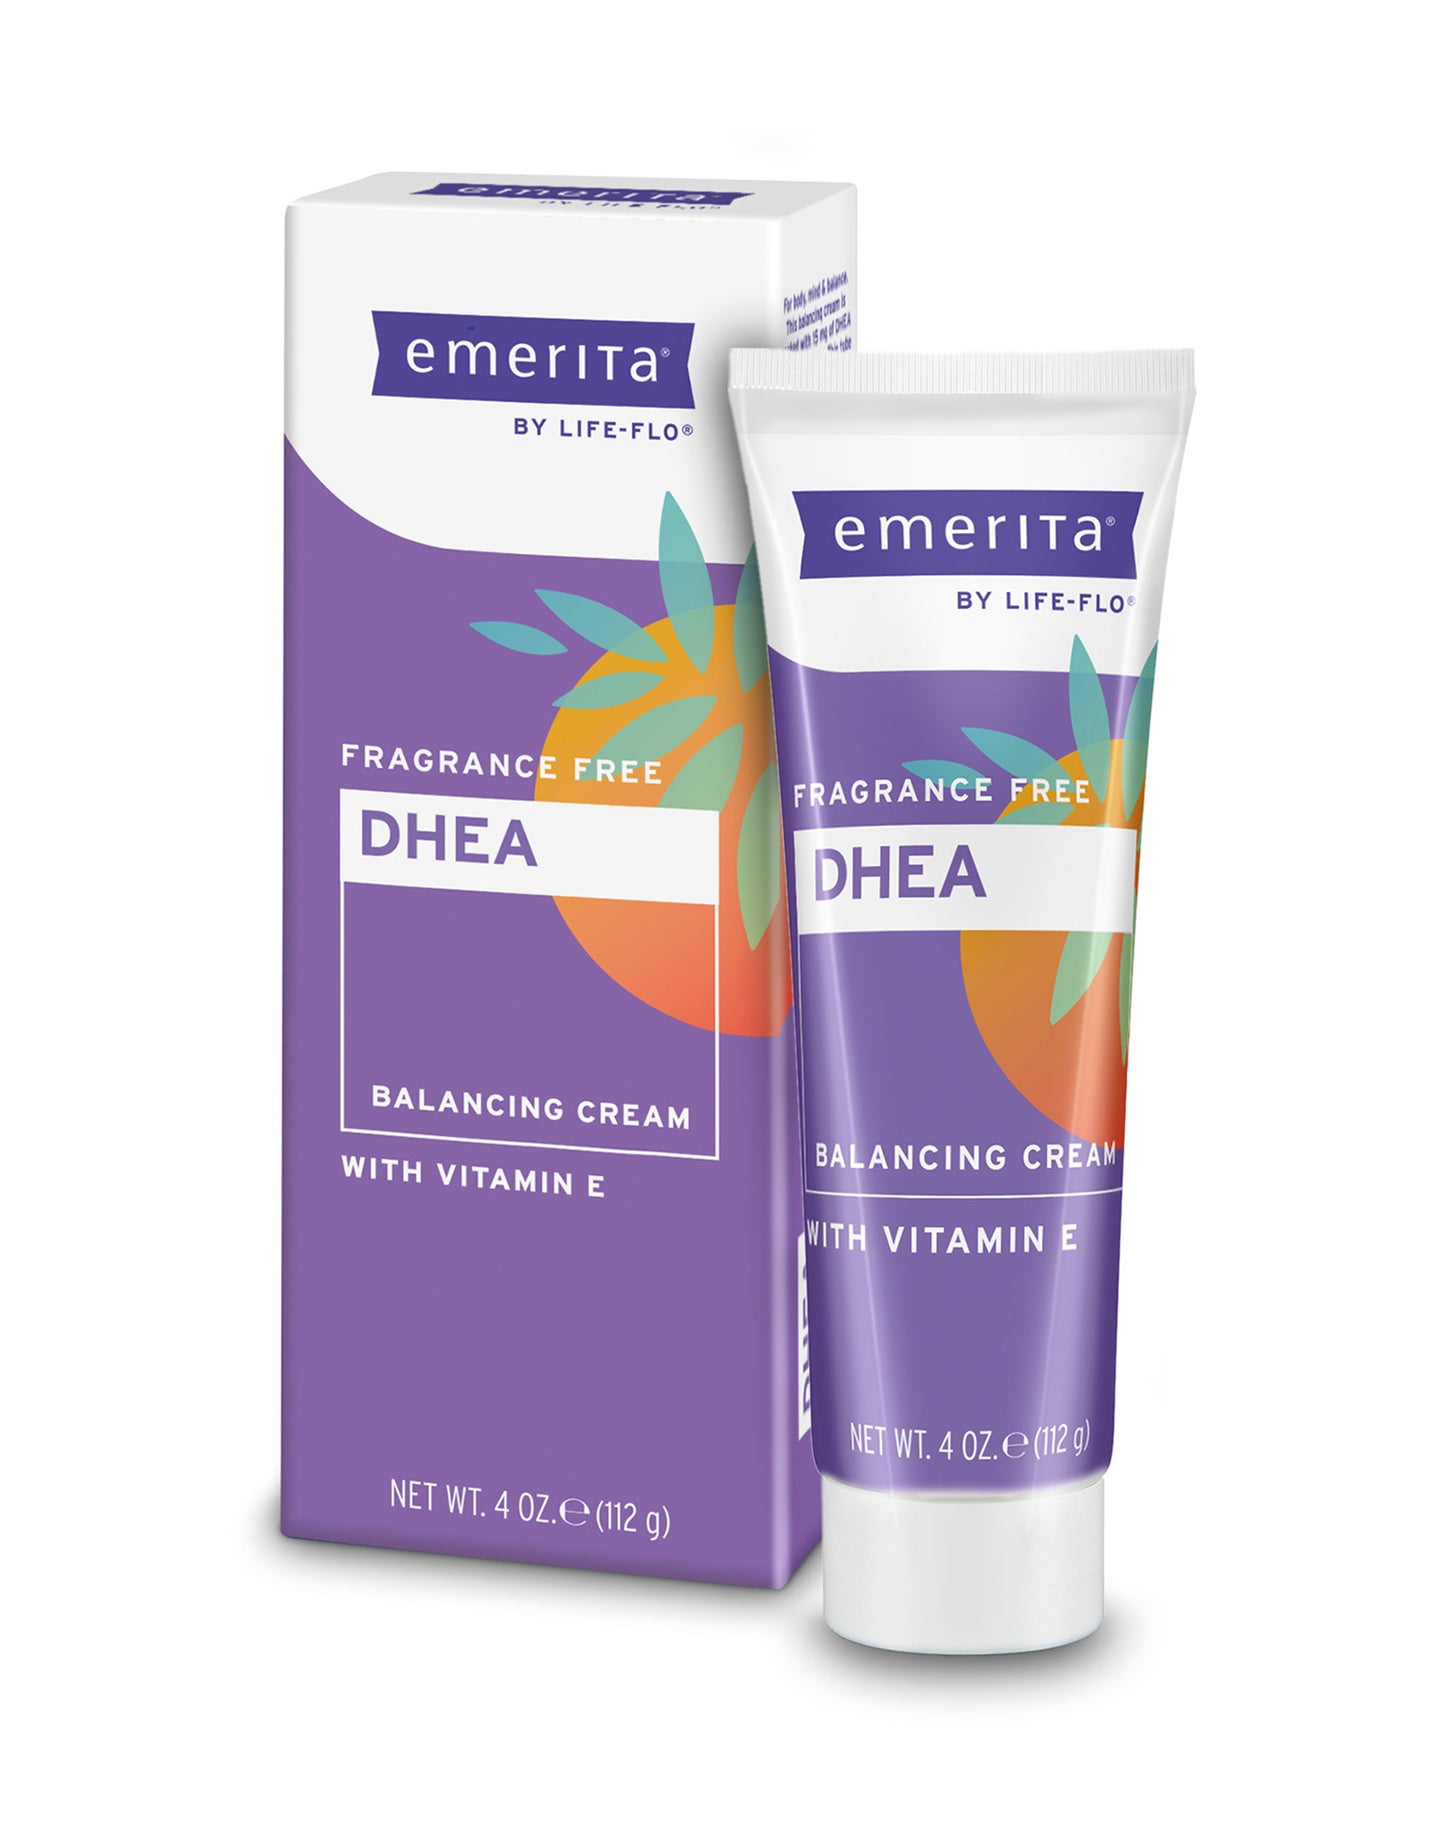 DHEA Balancing Cream